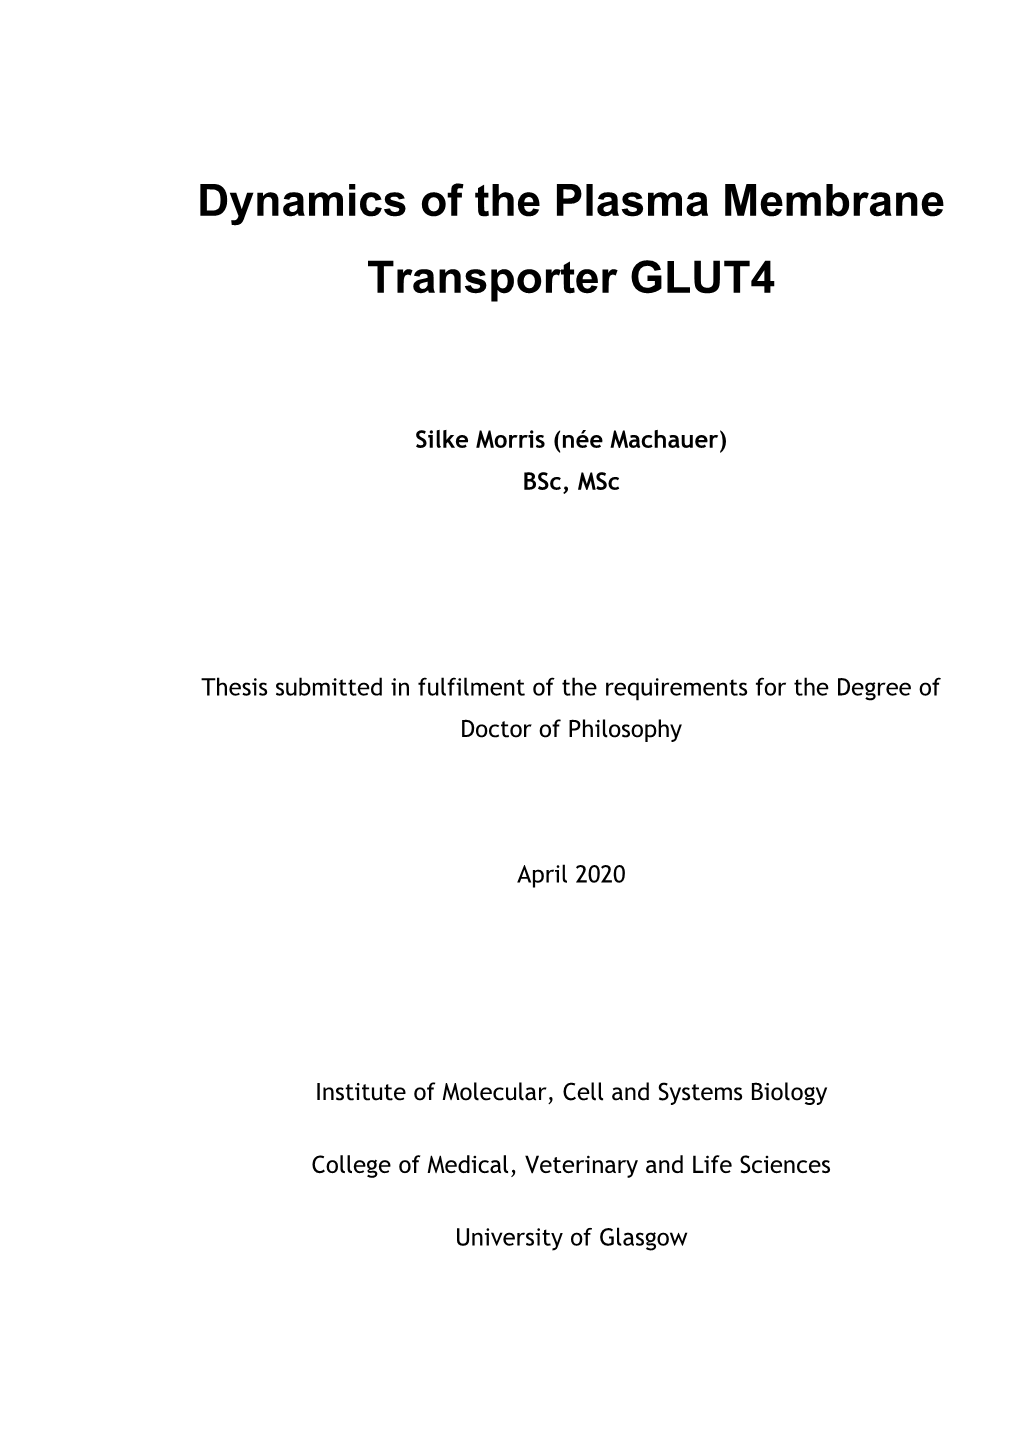 Dynamics of the Plasma Membrane Transporter GLUT4